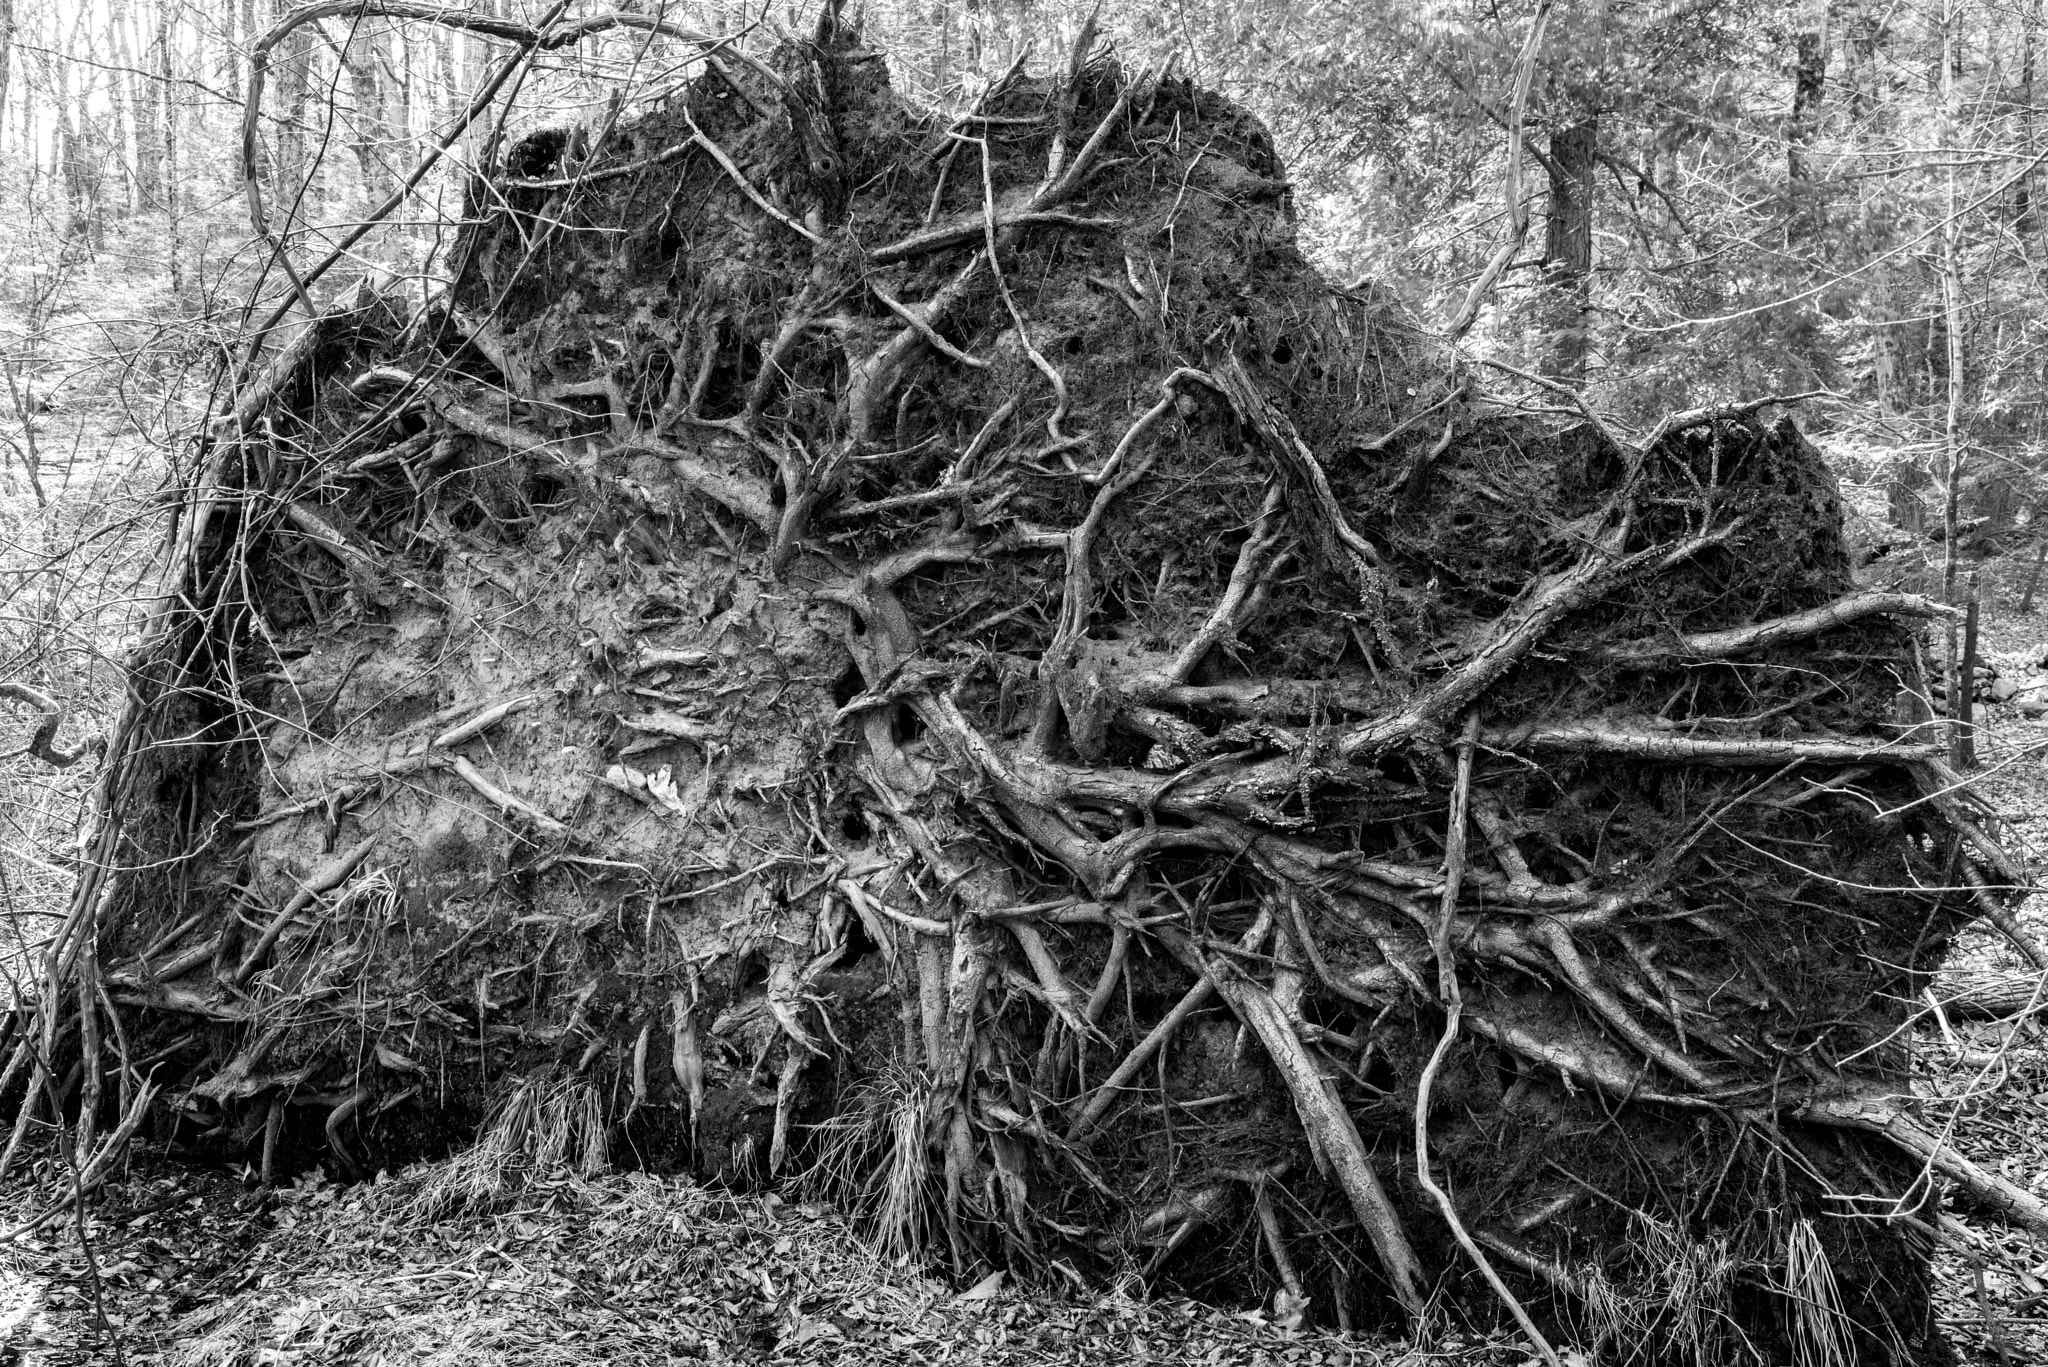 Pentax K-1 + Sigma 35mm F1.4 DG HSM Art sample photo. Roots of fallen tree photography